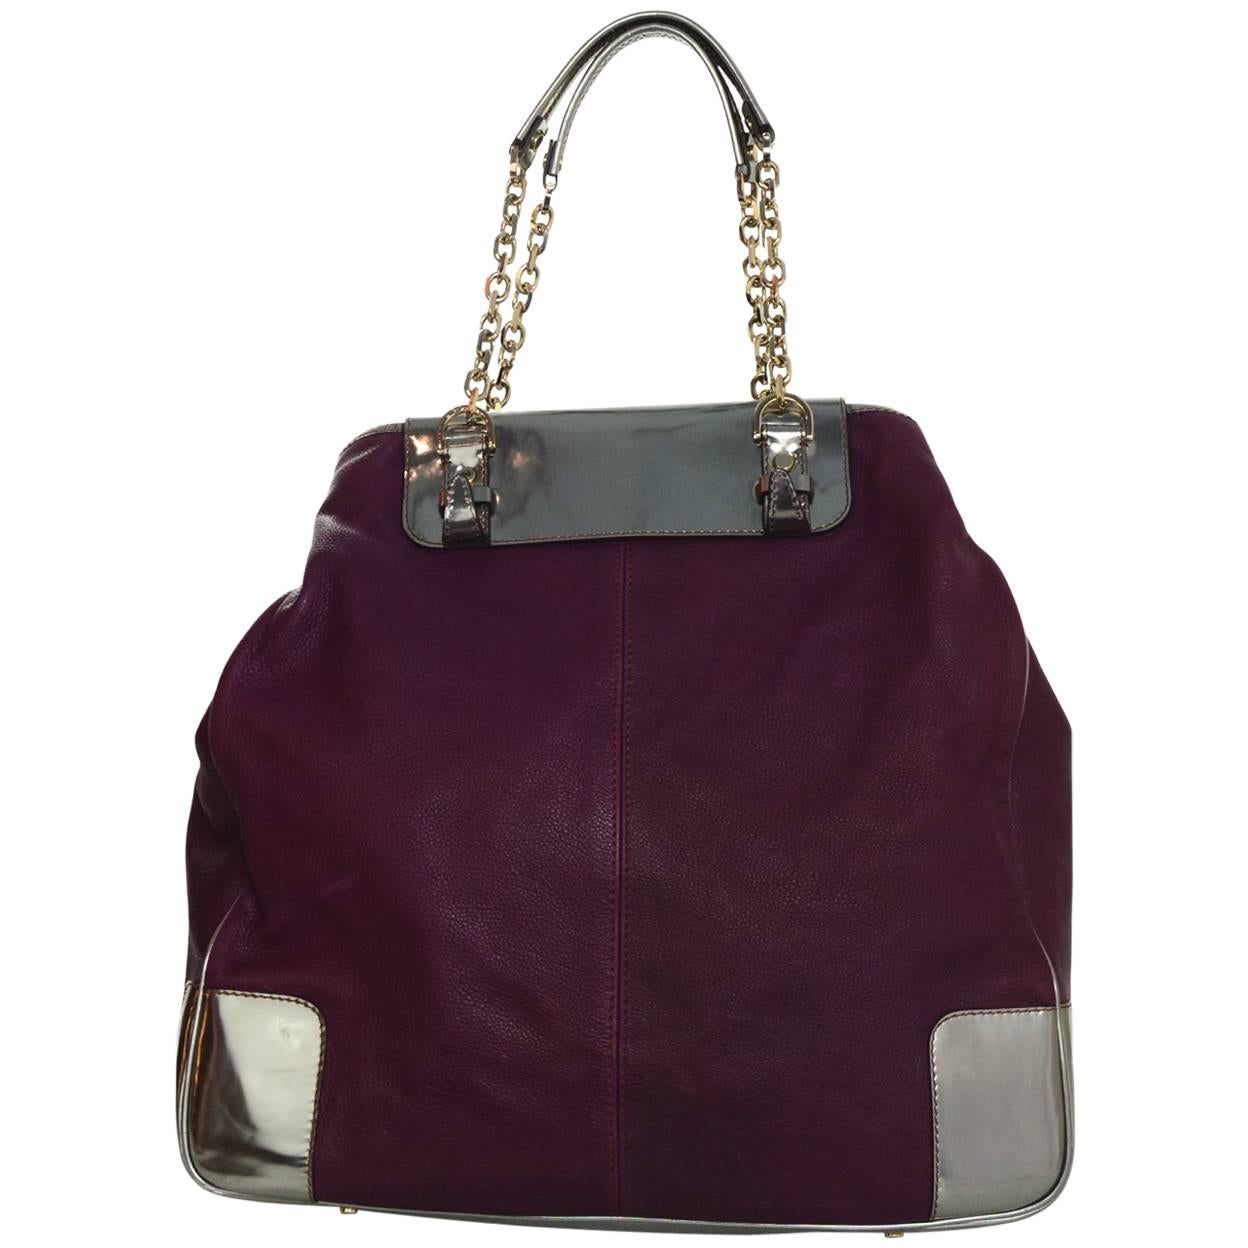 Lanvin Raspberry Leather Tote Bag